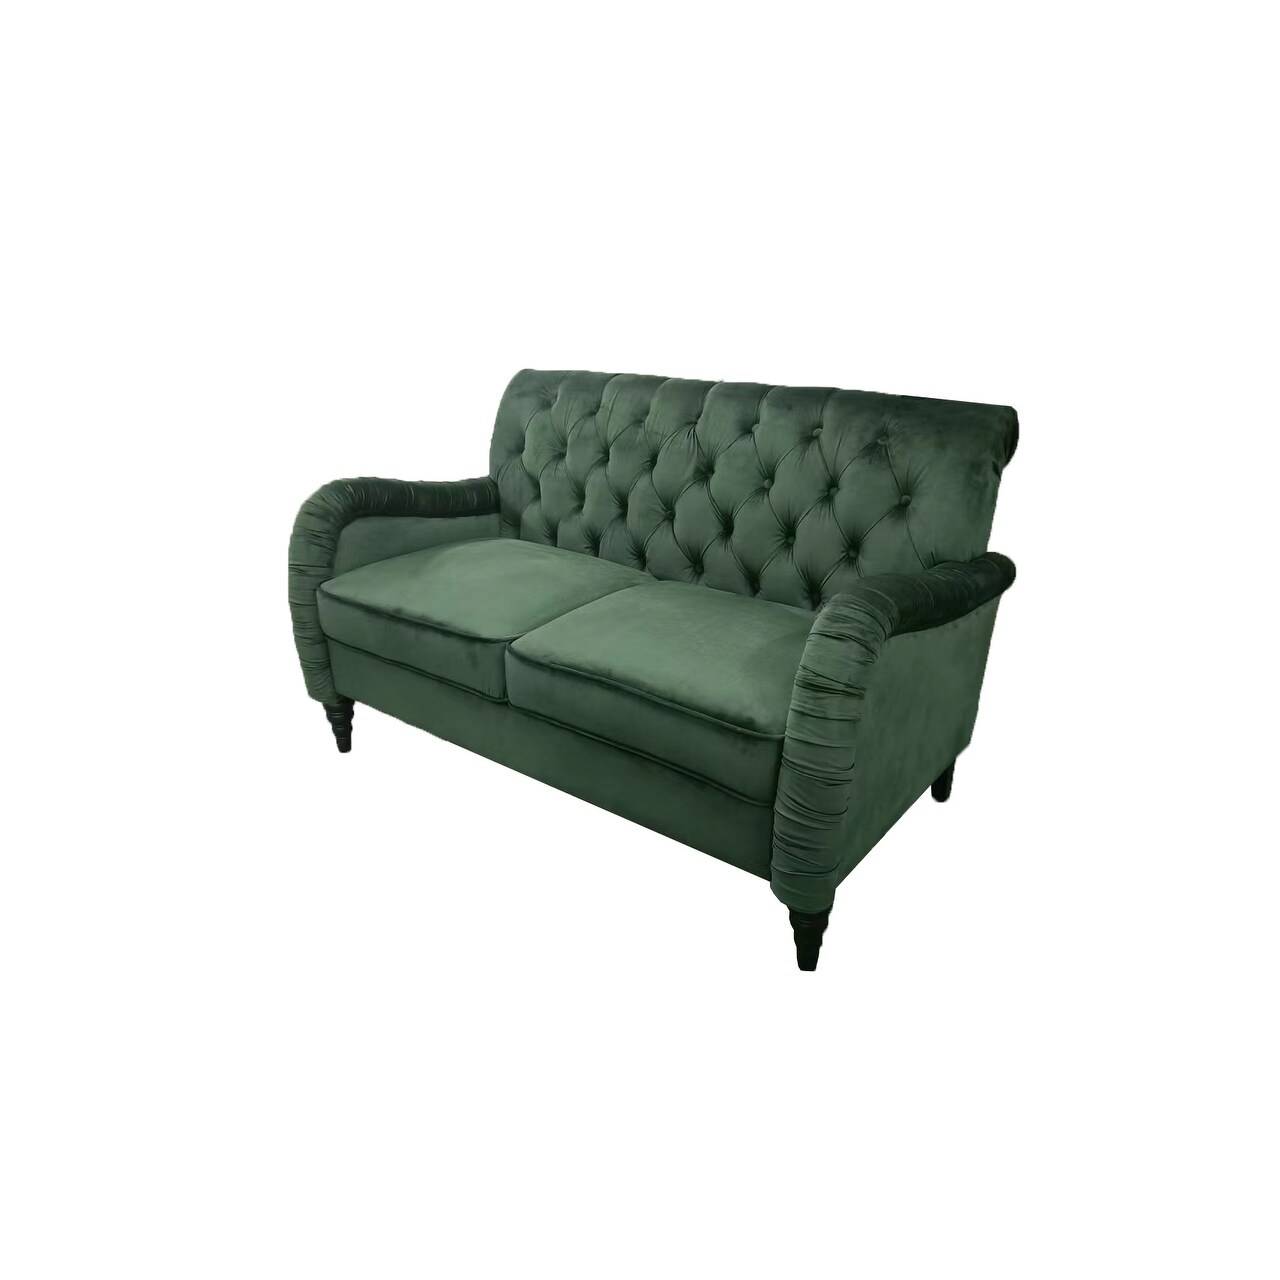 Velvet Chesterfield Loveseat Sofa with Luxurious Plush Cushions